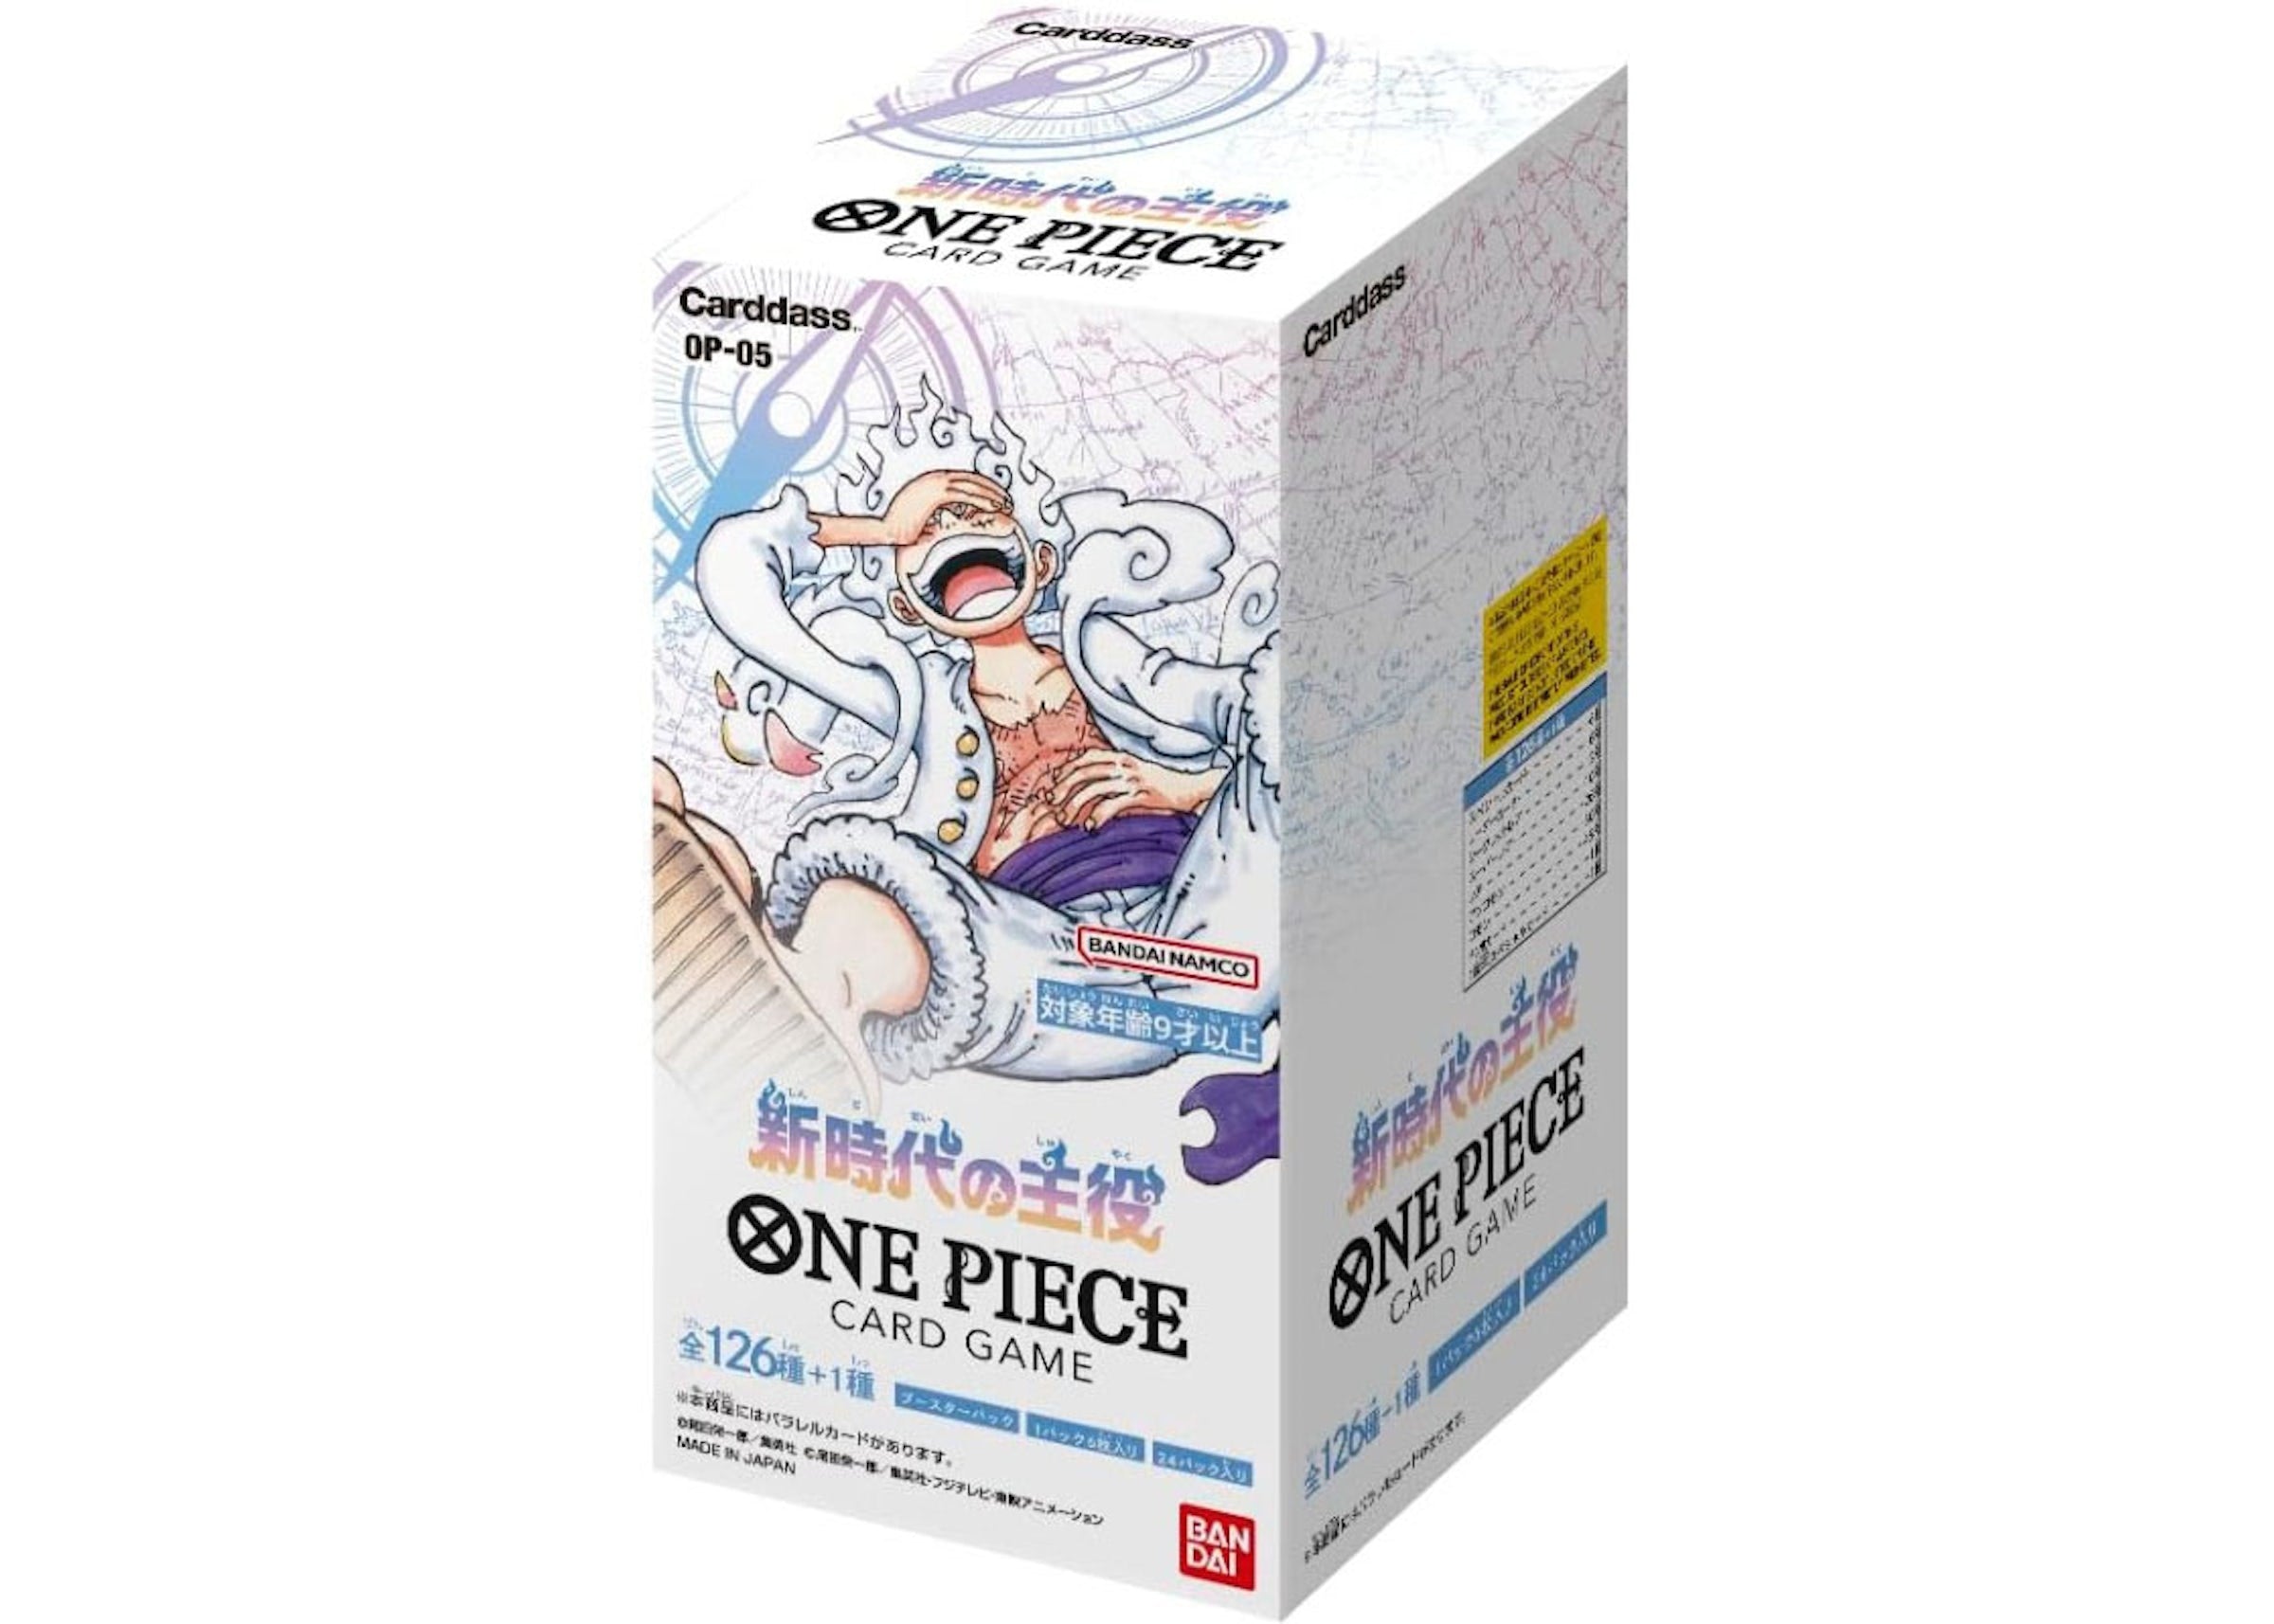 One Piece TCG: Awakening of a New Era OP-05 Single Booster Box (Japanese)